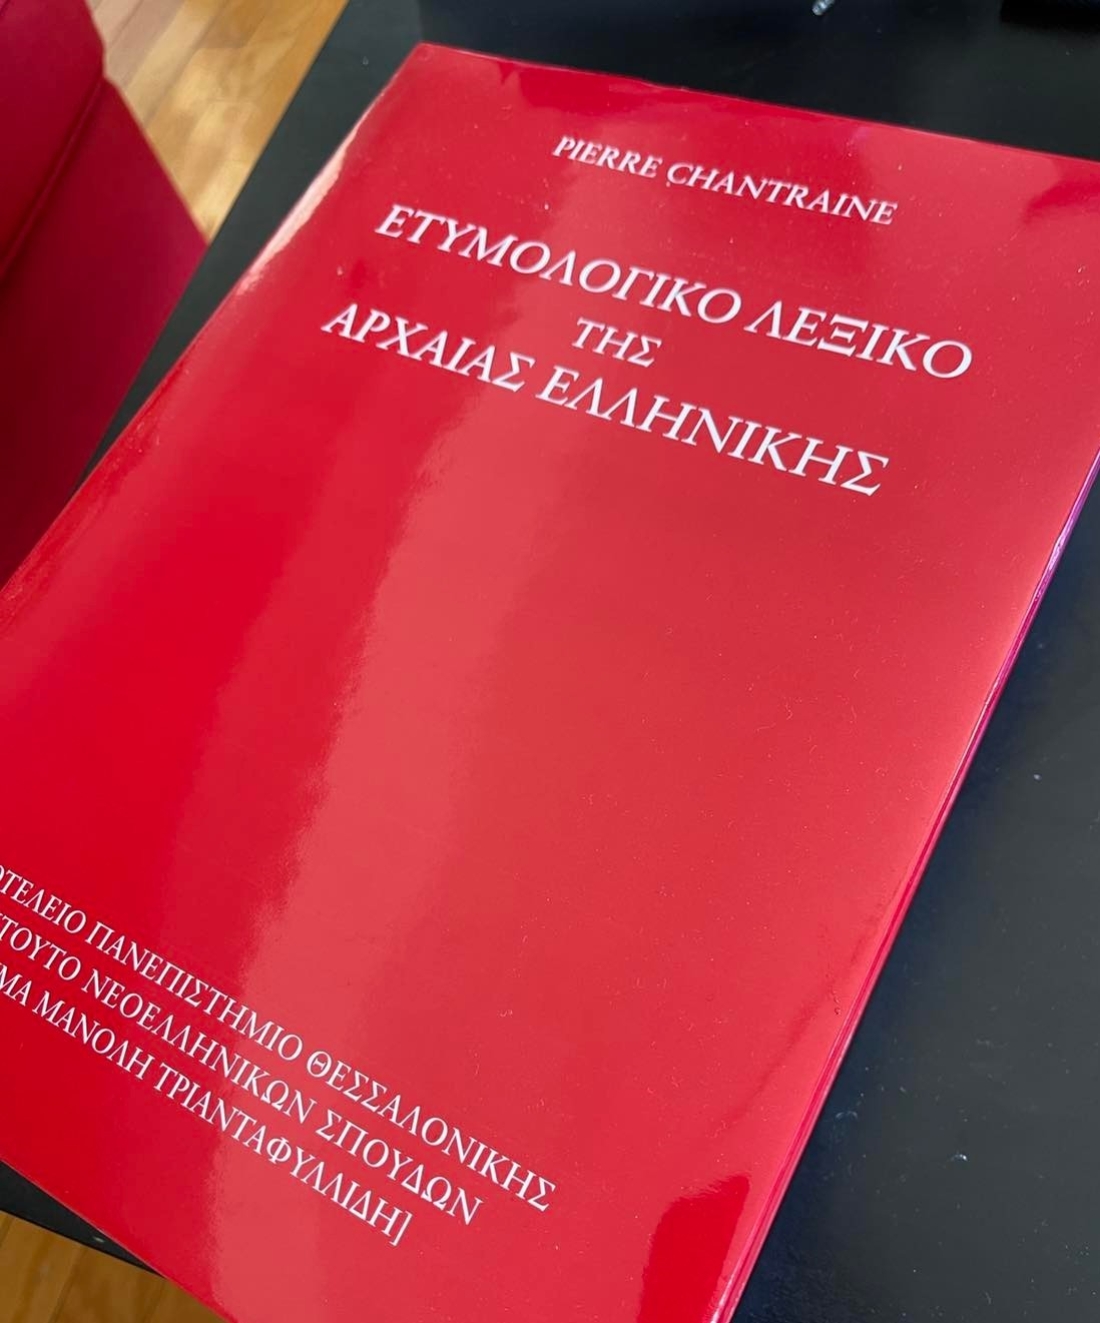 To επίτομο Ετυμολογικό λεξικό της αρχαίας ελληνικής του Pierre Chantraine στην ελληνική έκδοση που μόλις κυκλοφόρησε.